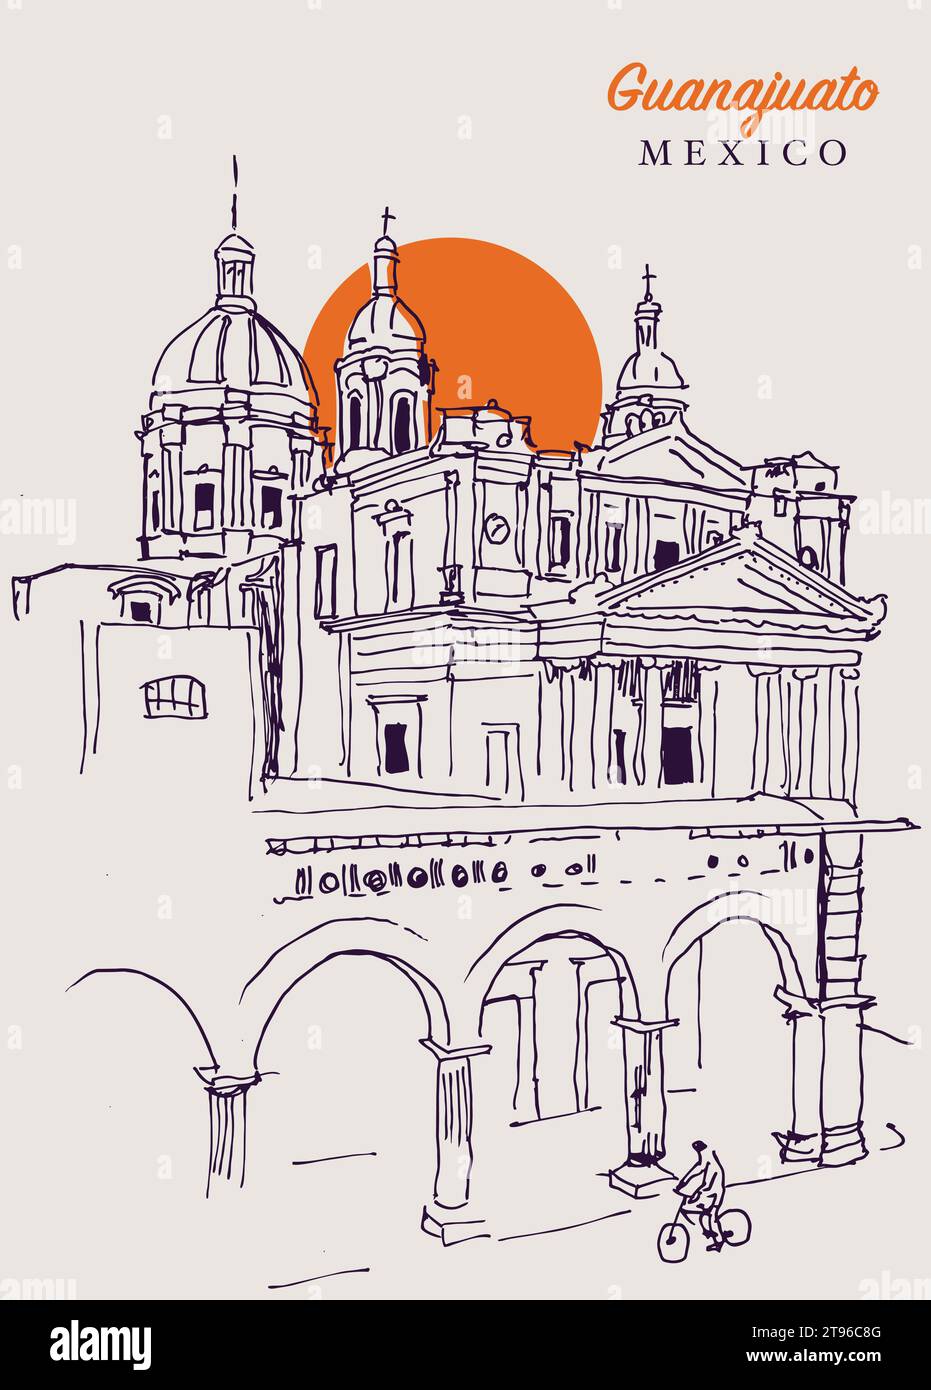 Vector hand drawn sketch illustration of the San Jose Iturbide church in Guanajuato, Mexico. Stock Vector